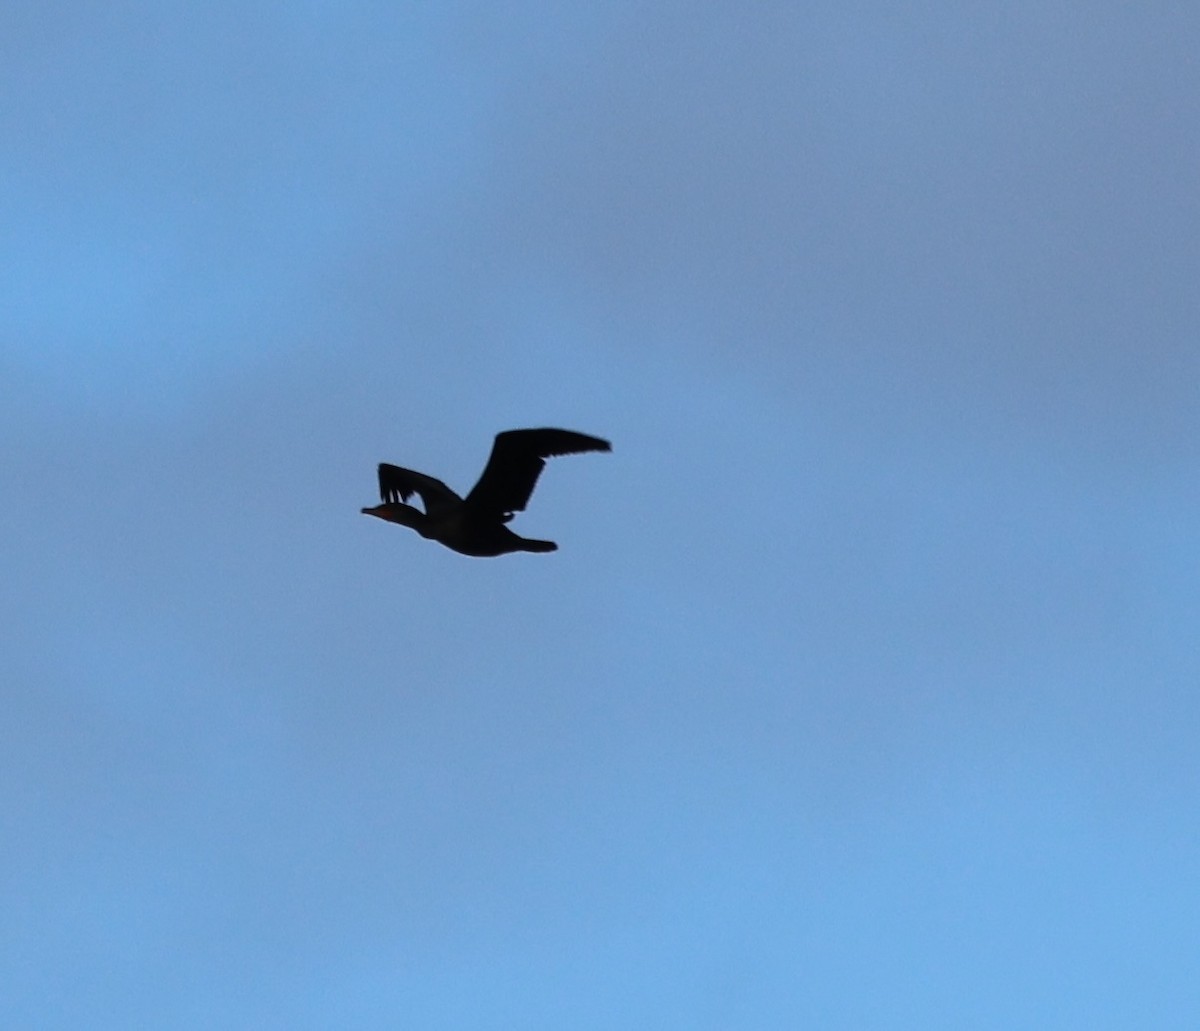 Double-crested Cormorant - burton balkind